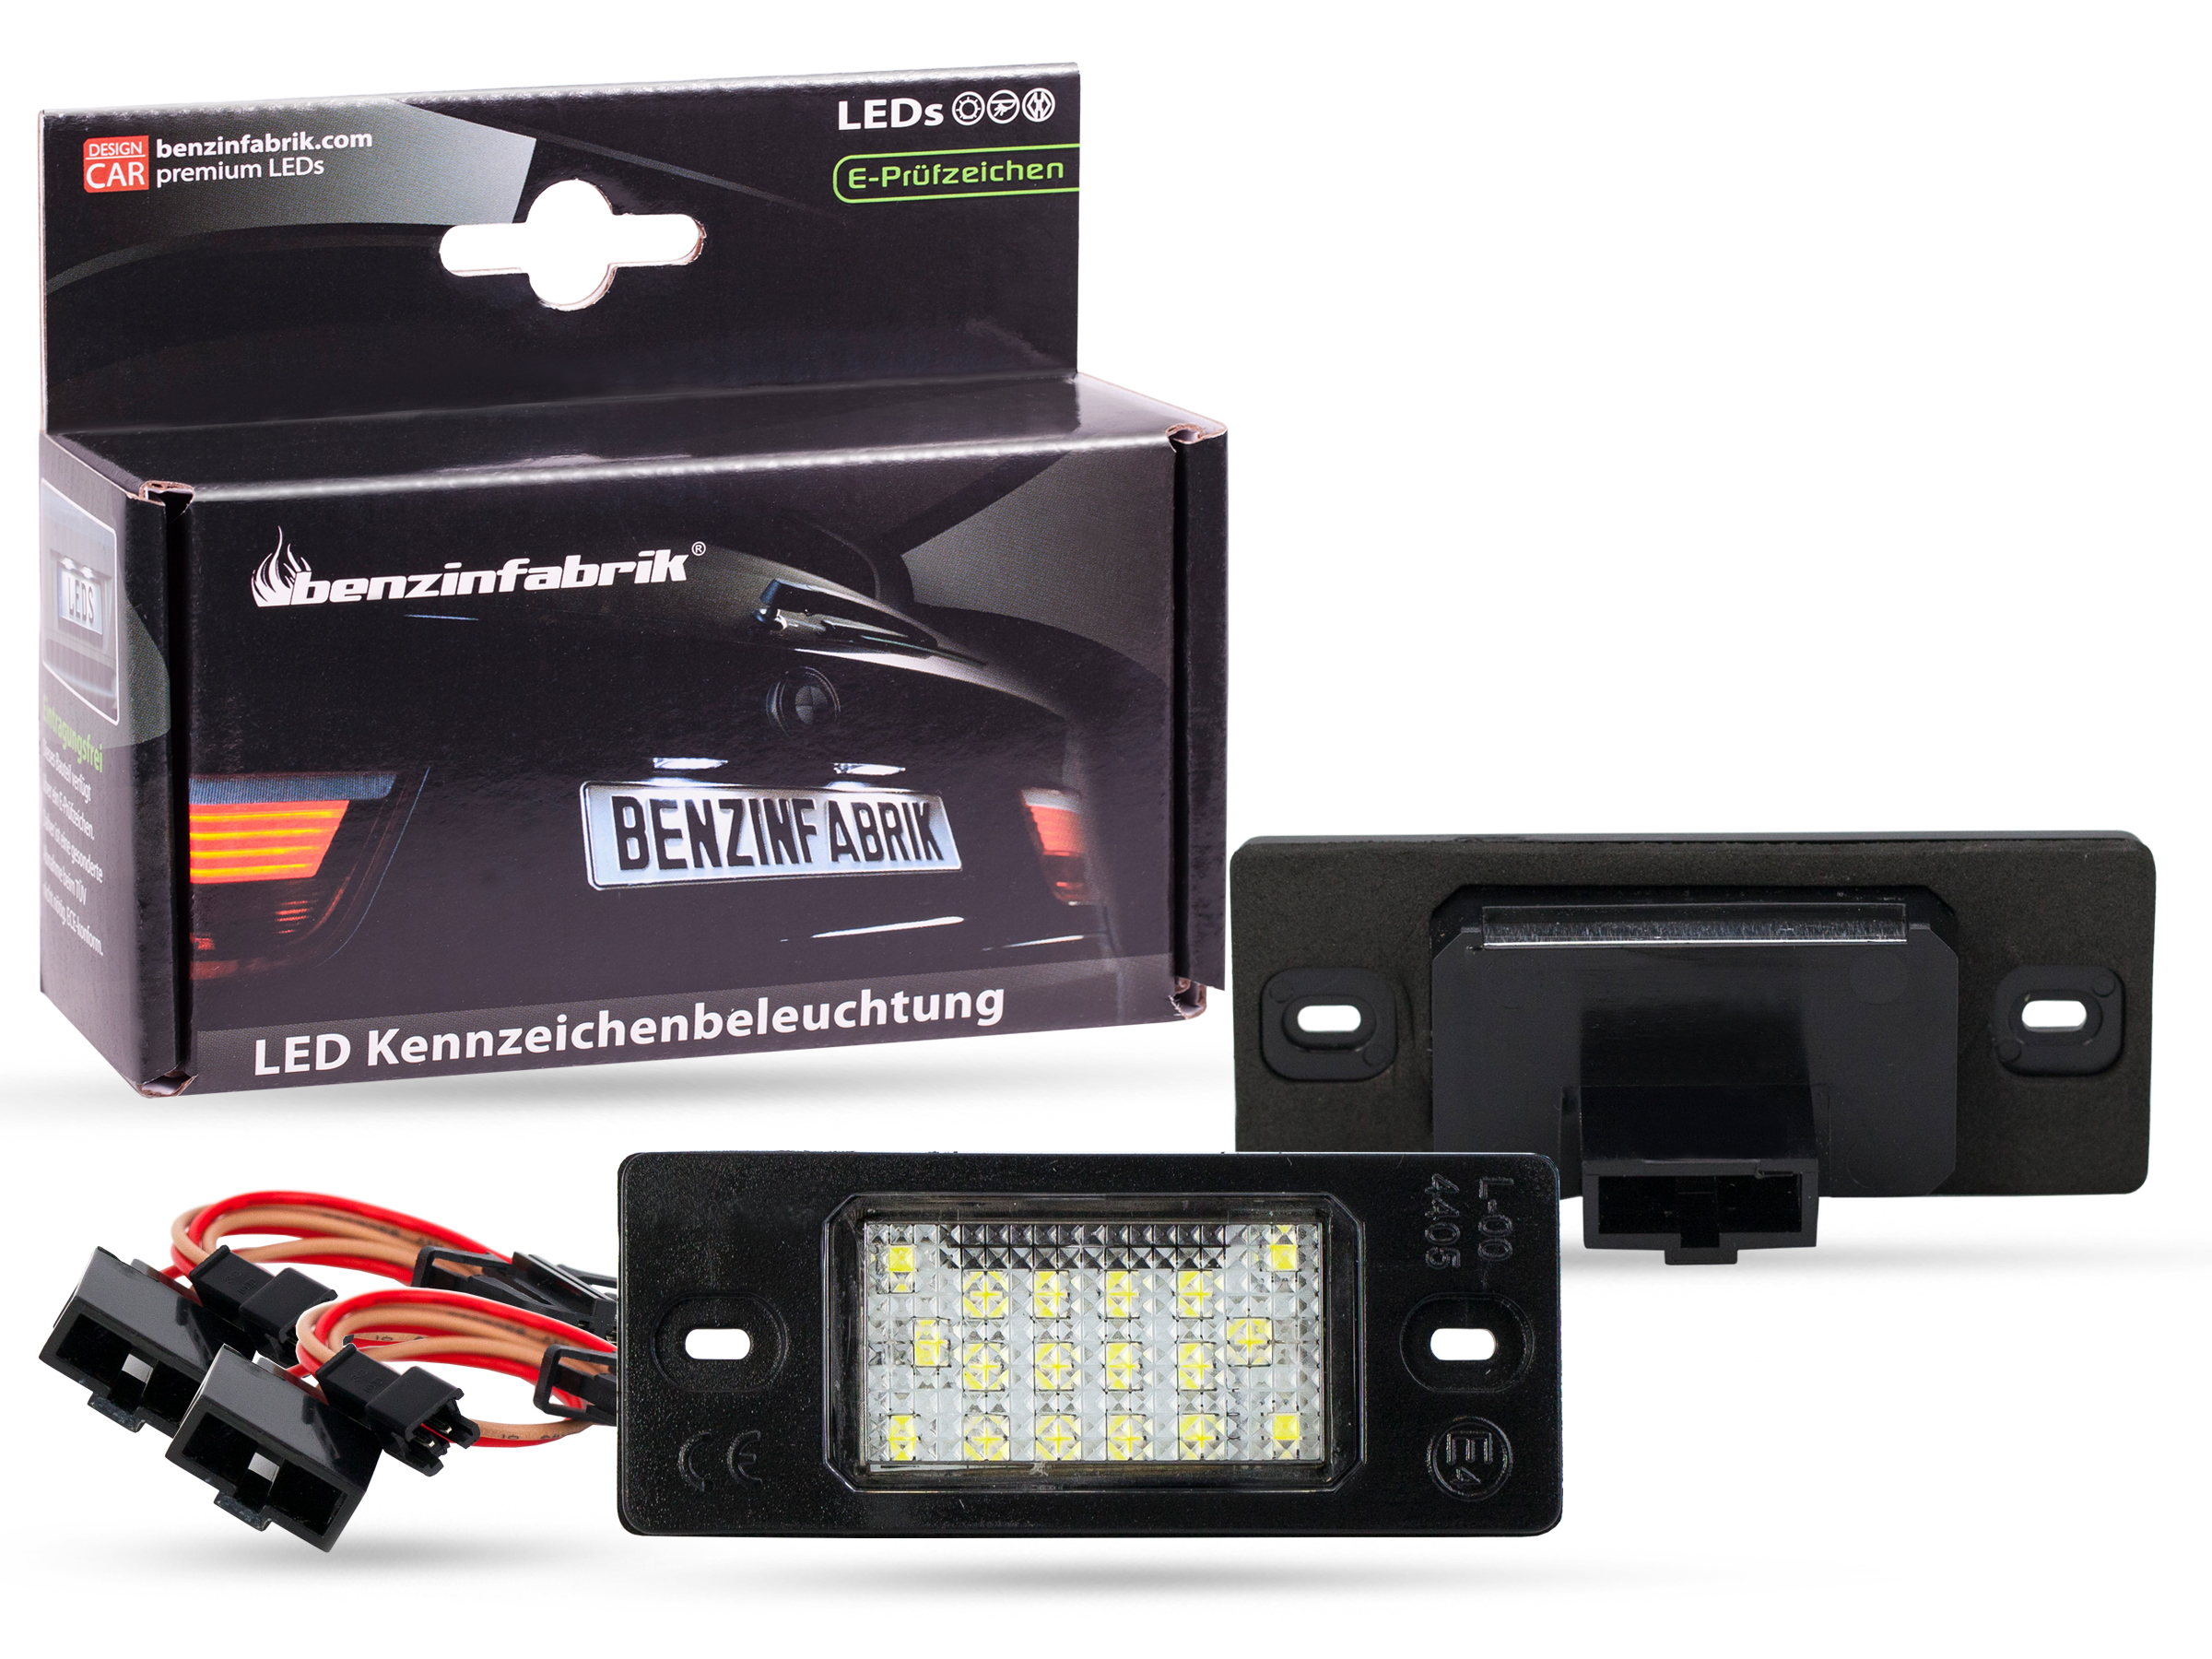 LED Kennzeichenbeleuchtung Module VW Touareg, mit E-Prüfzeichen